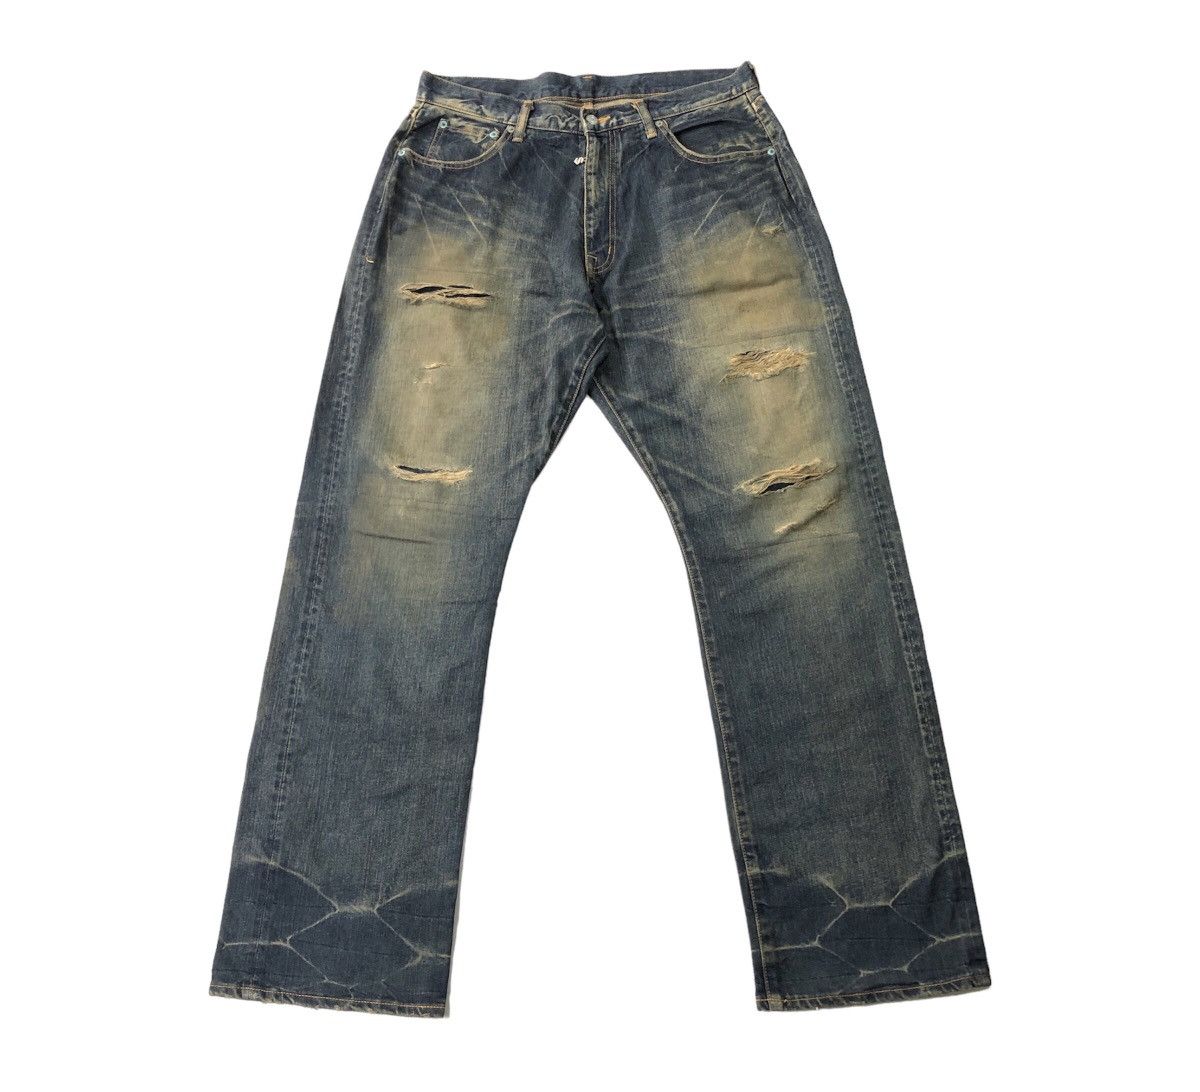 Phenomenon Rare! Vintage Swagger Japan Distressed Design Denim Jeans ...